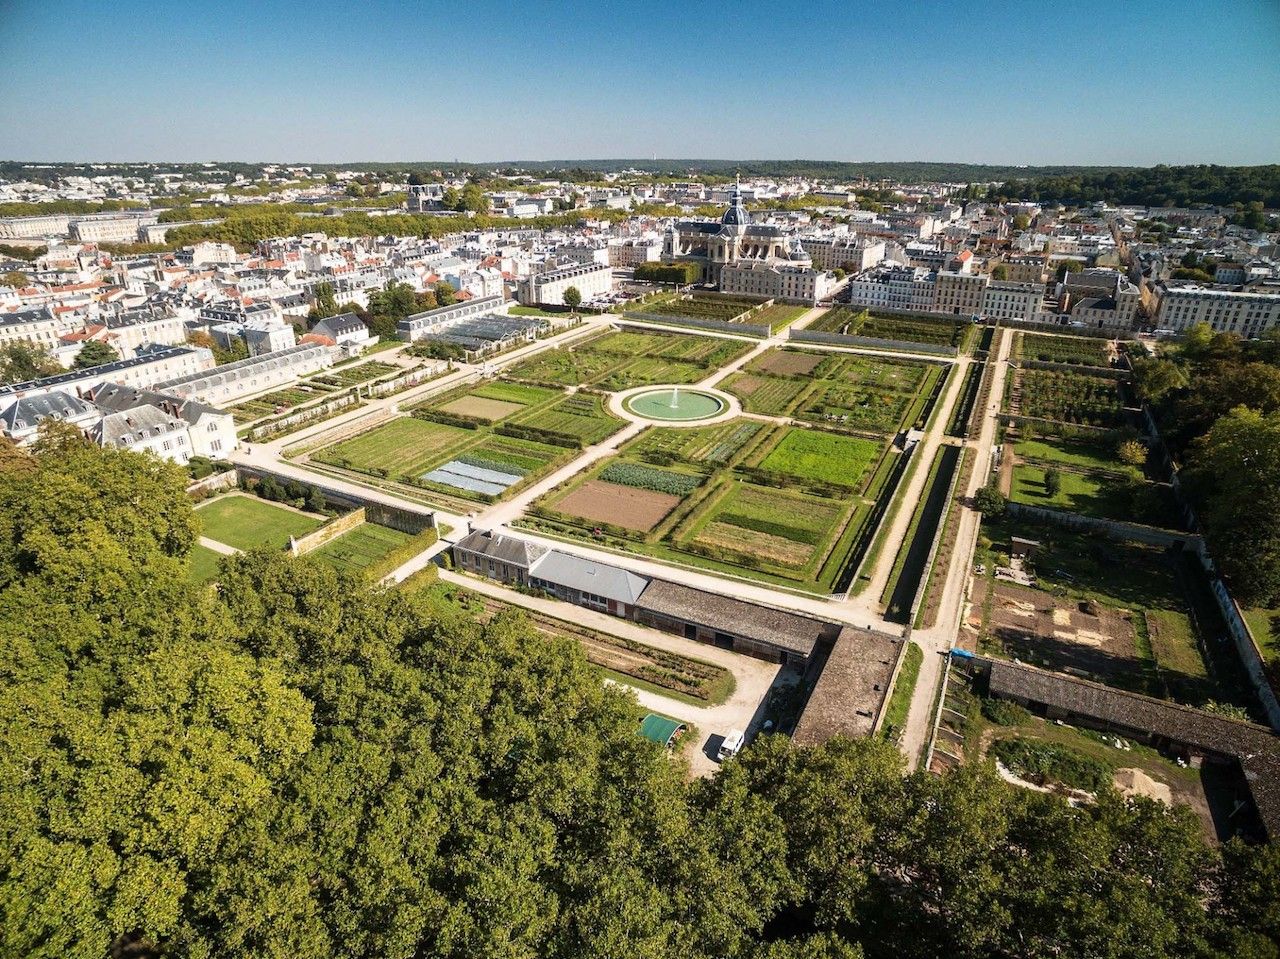 Overview of Versailles